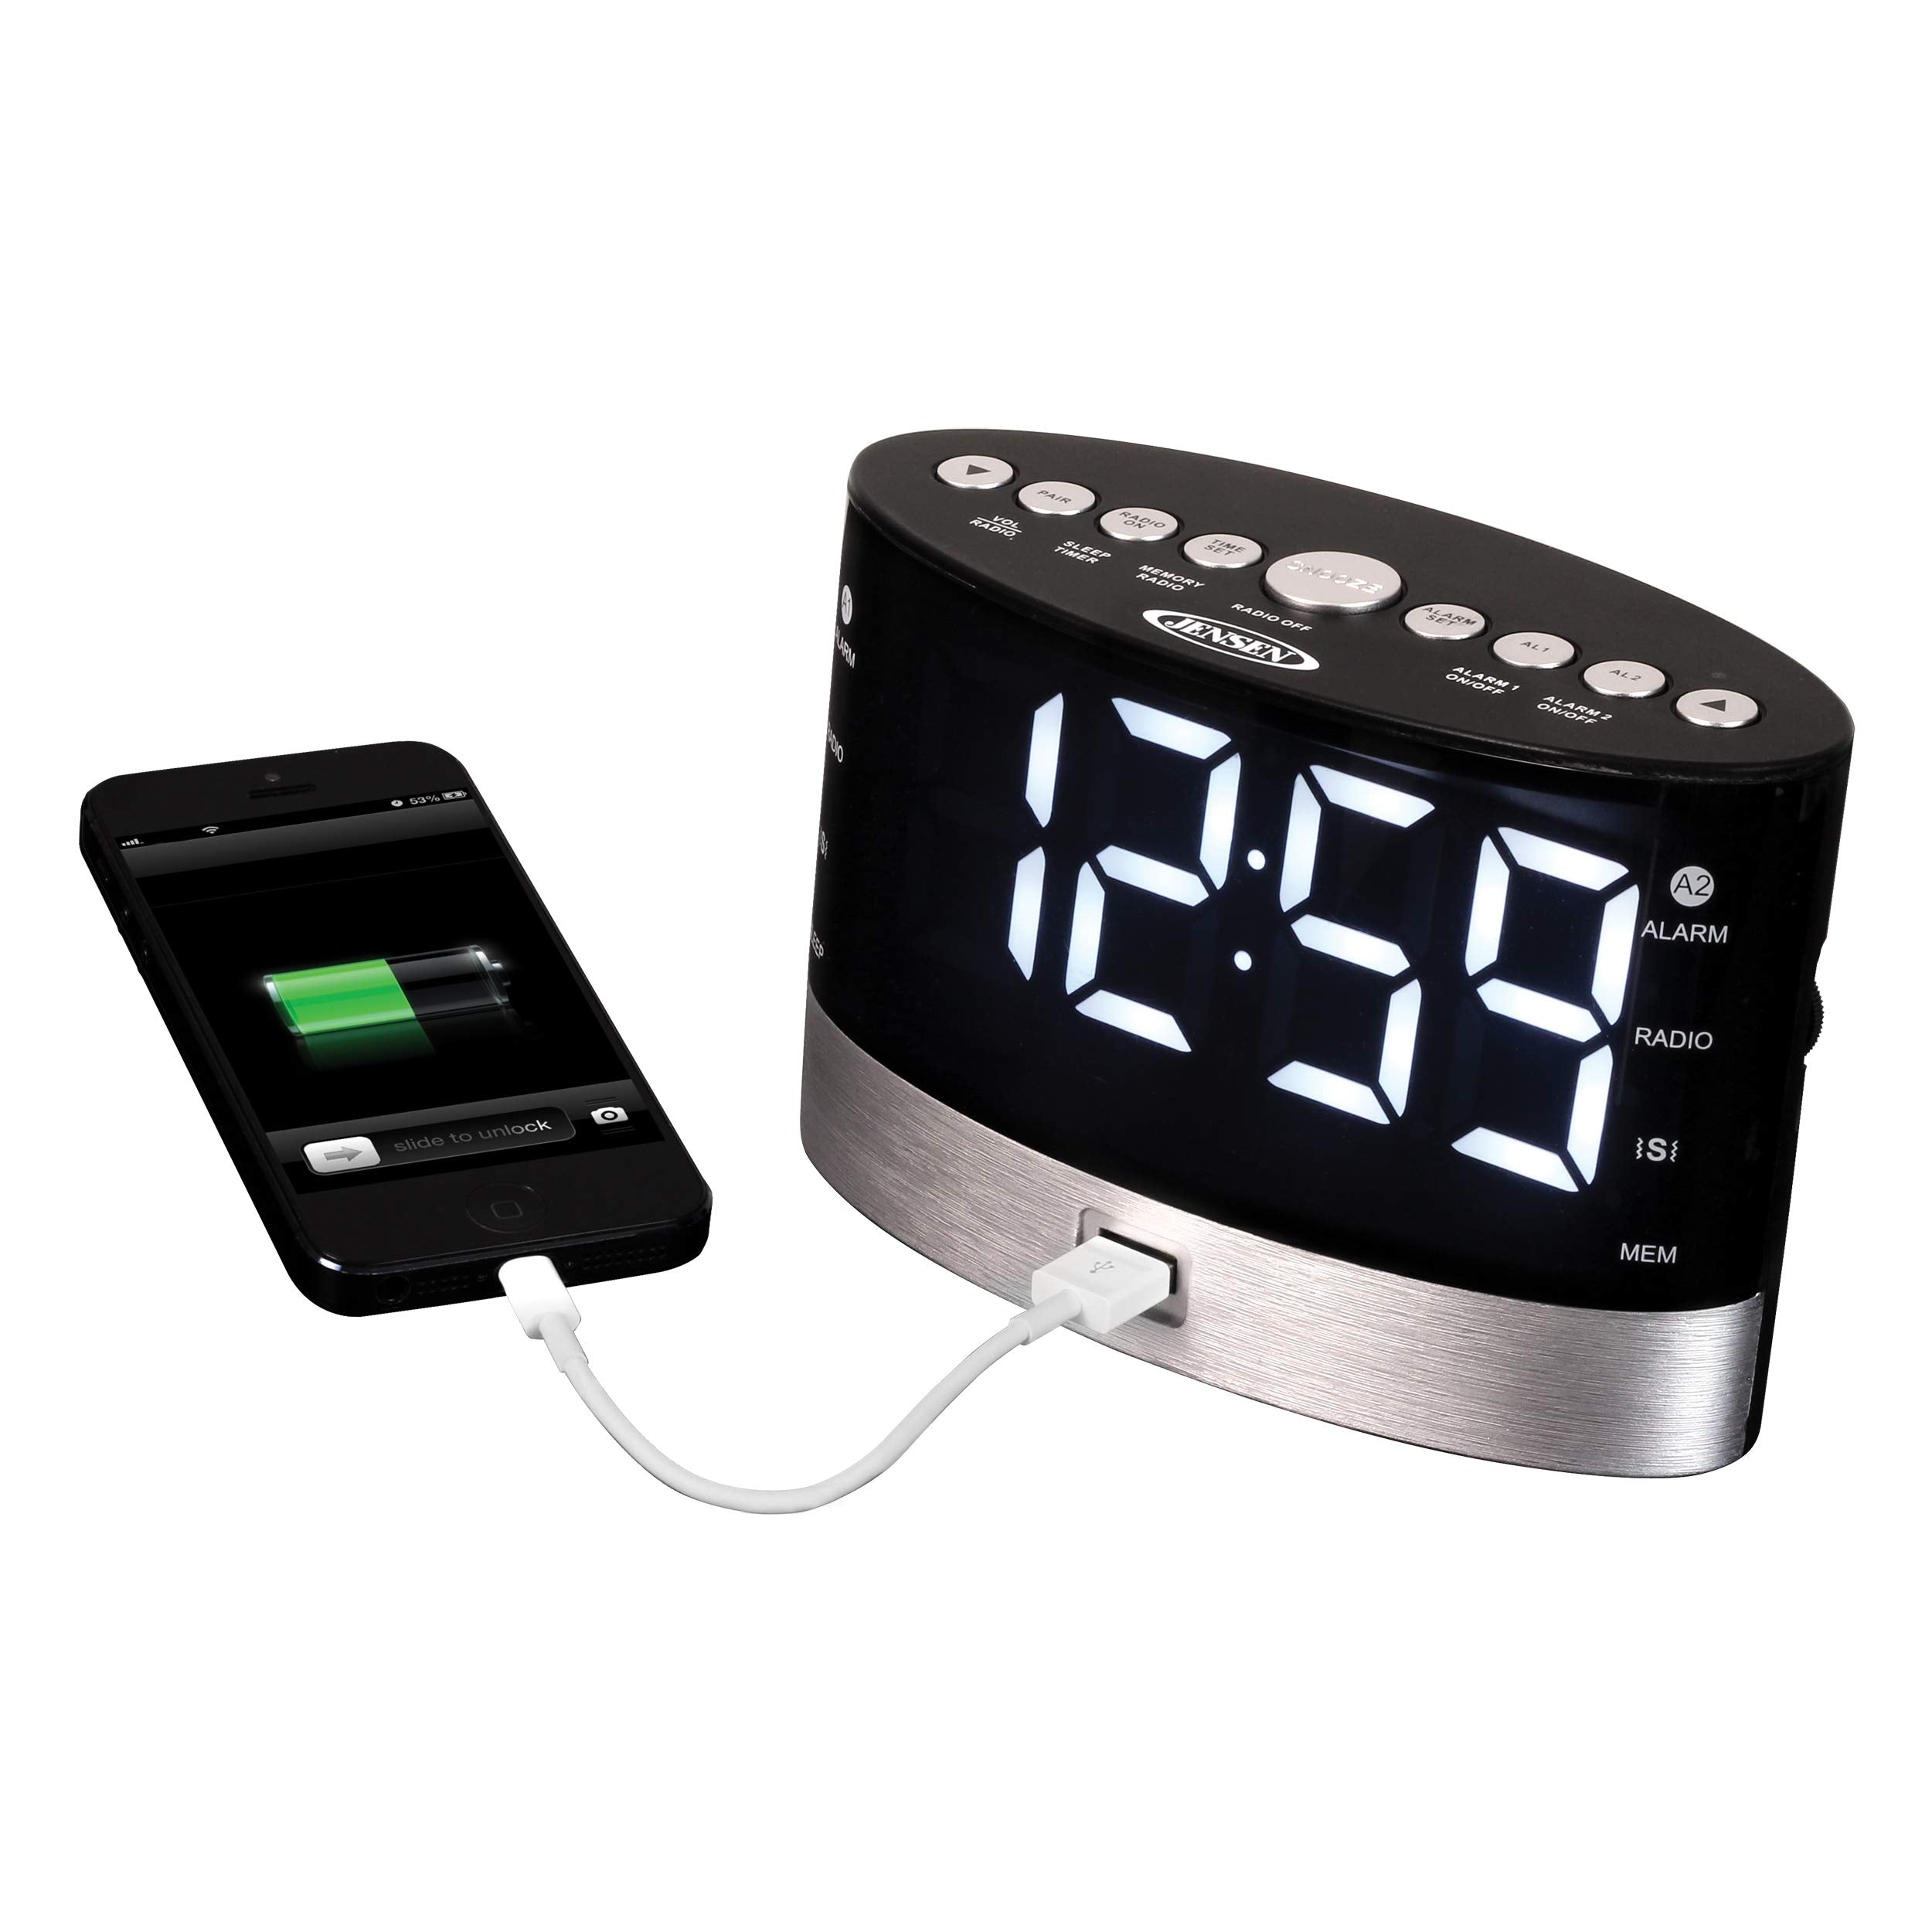 JENSEN JCR-255 JCR-255 .6-Watt AM/FM Dual-Alarm Digital Clock Radio with Under-Pillow Vibrator